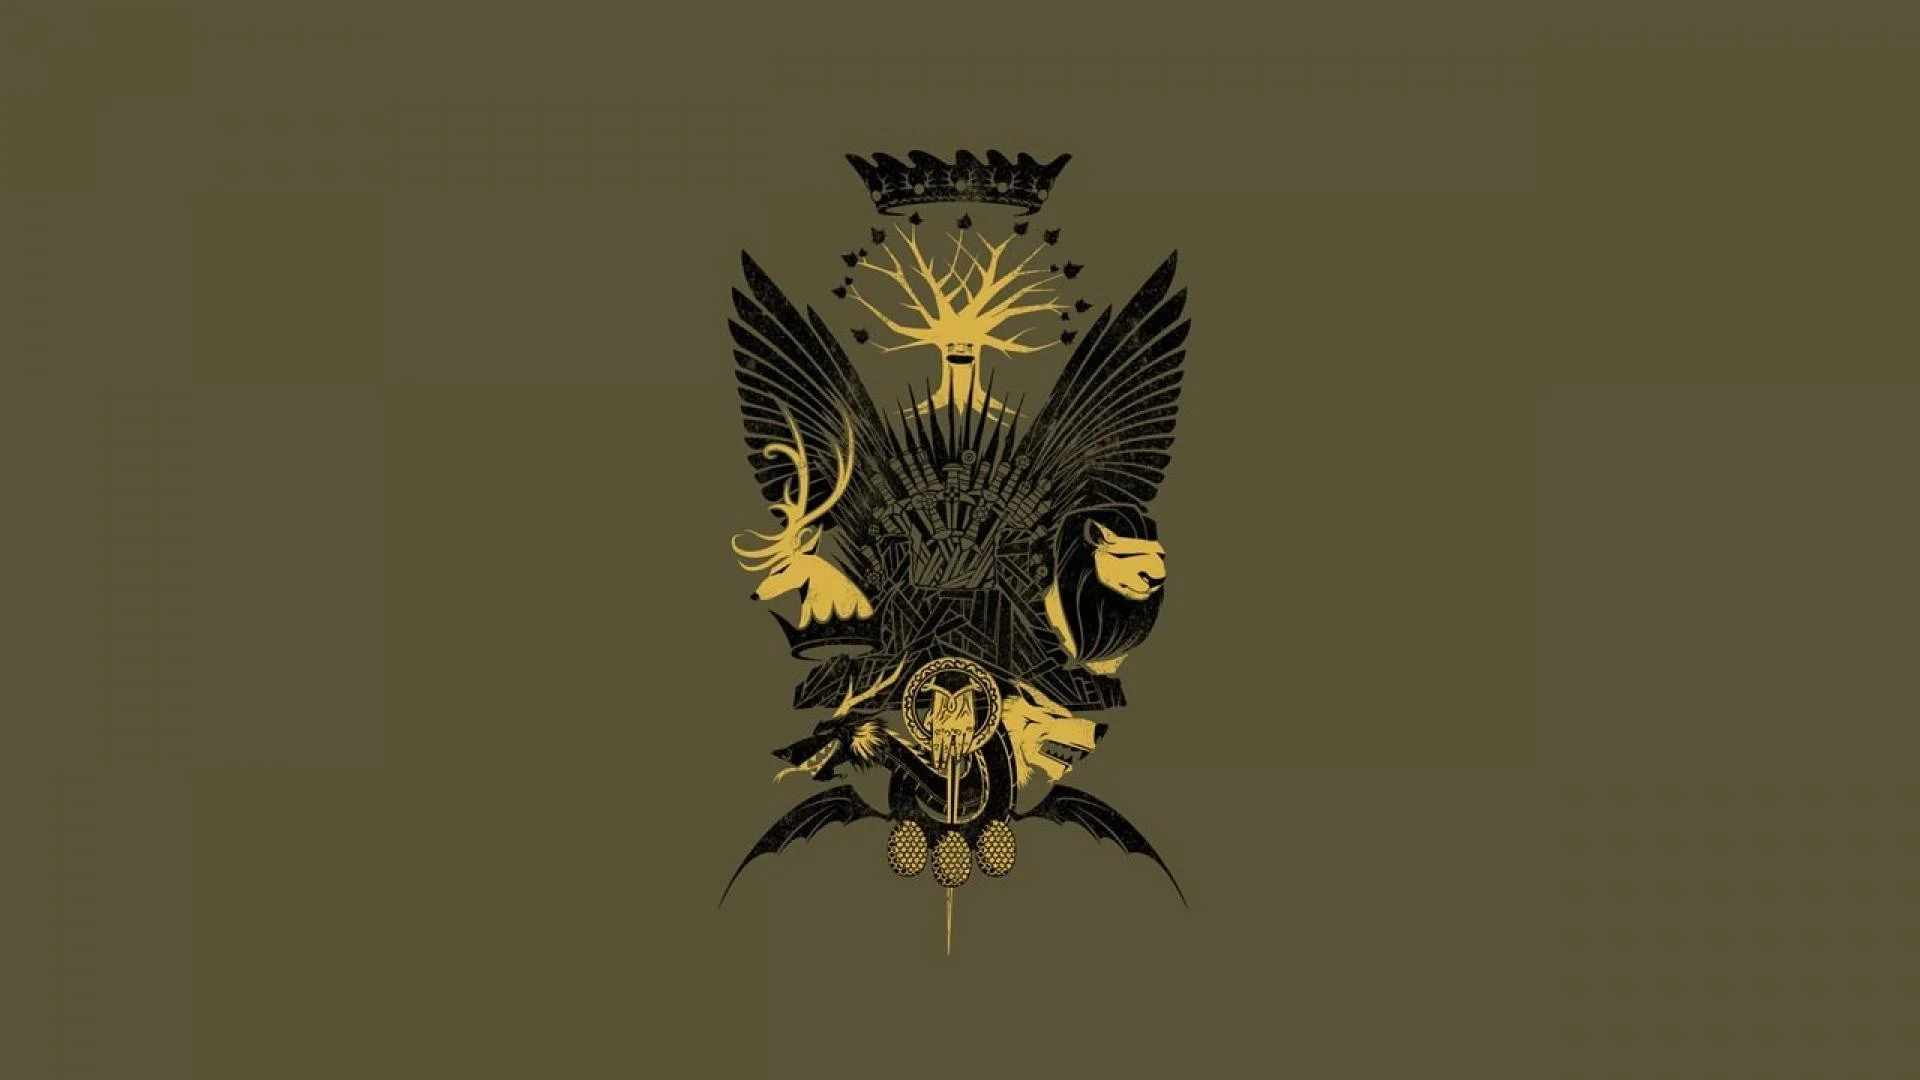 Houses game of thrones house lannister stark seal wallpaper | (49250)